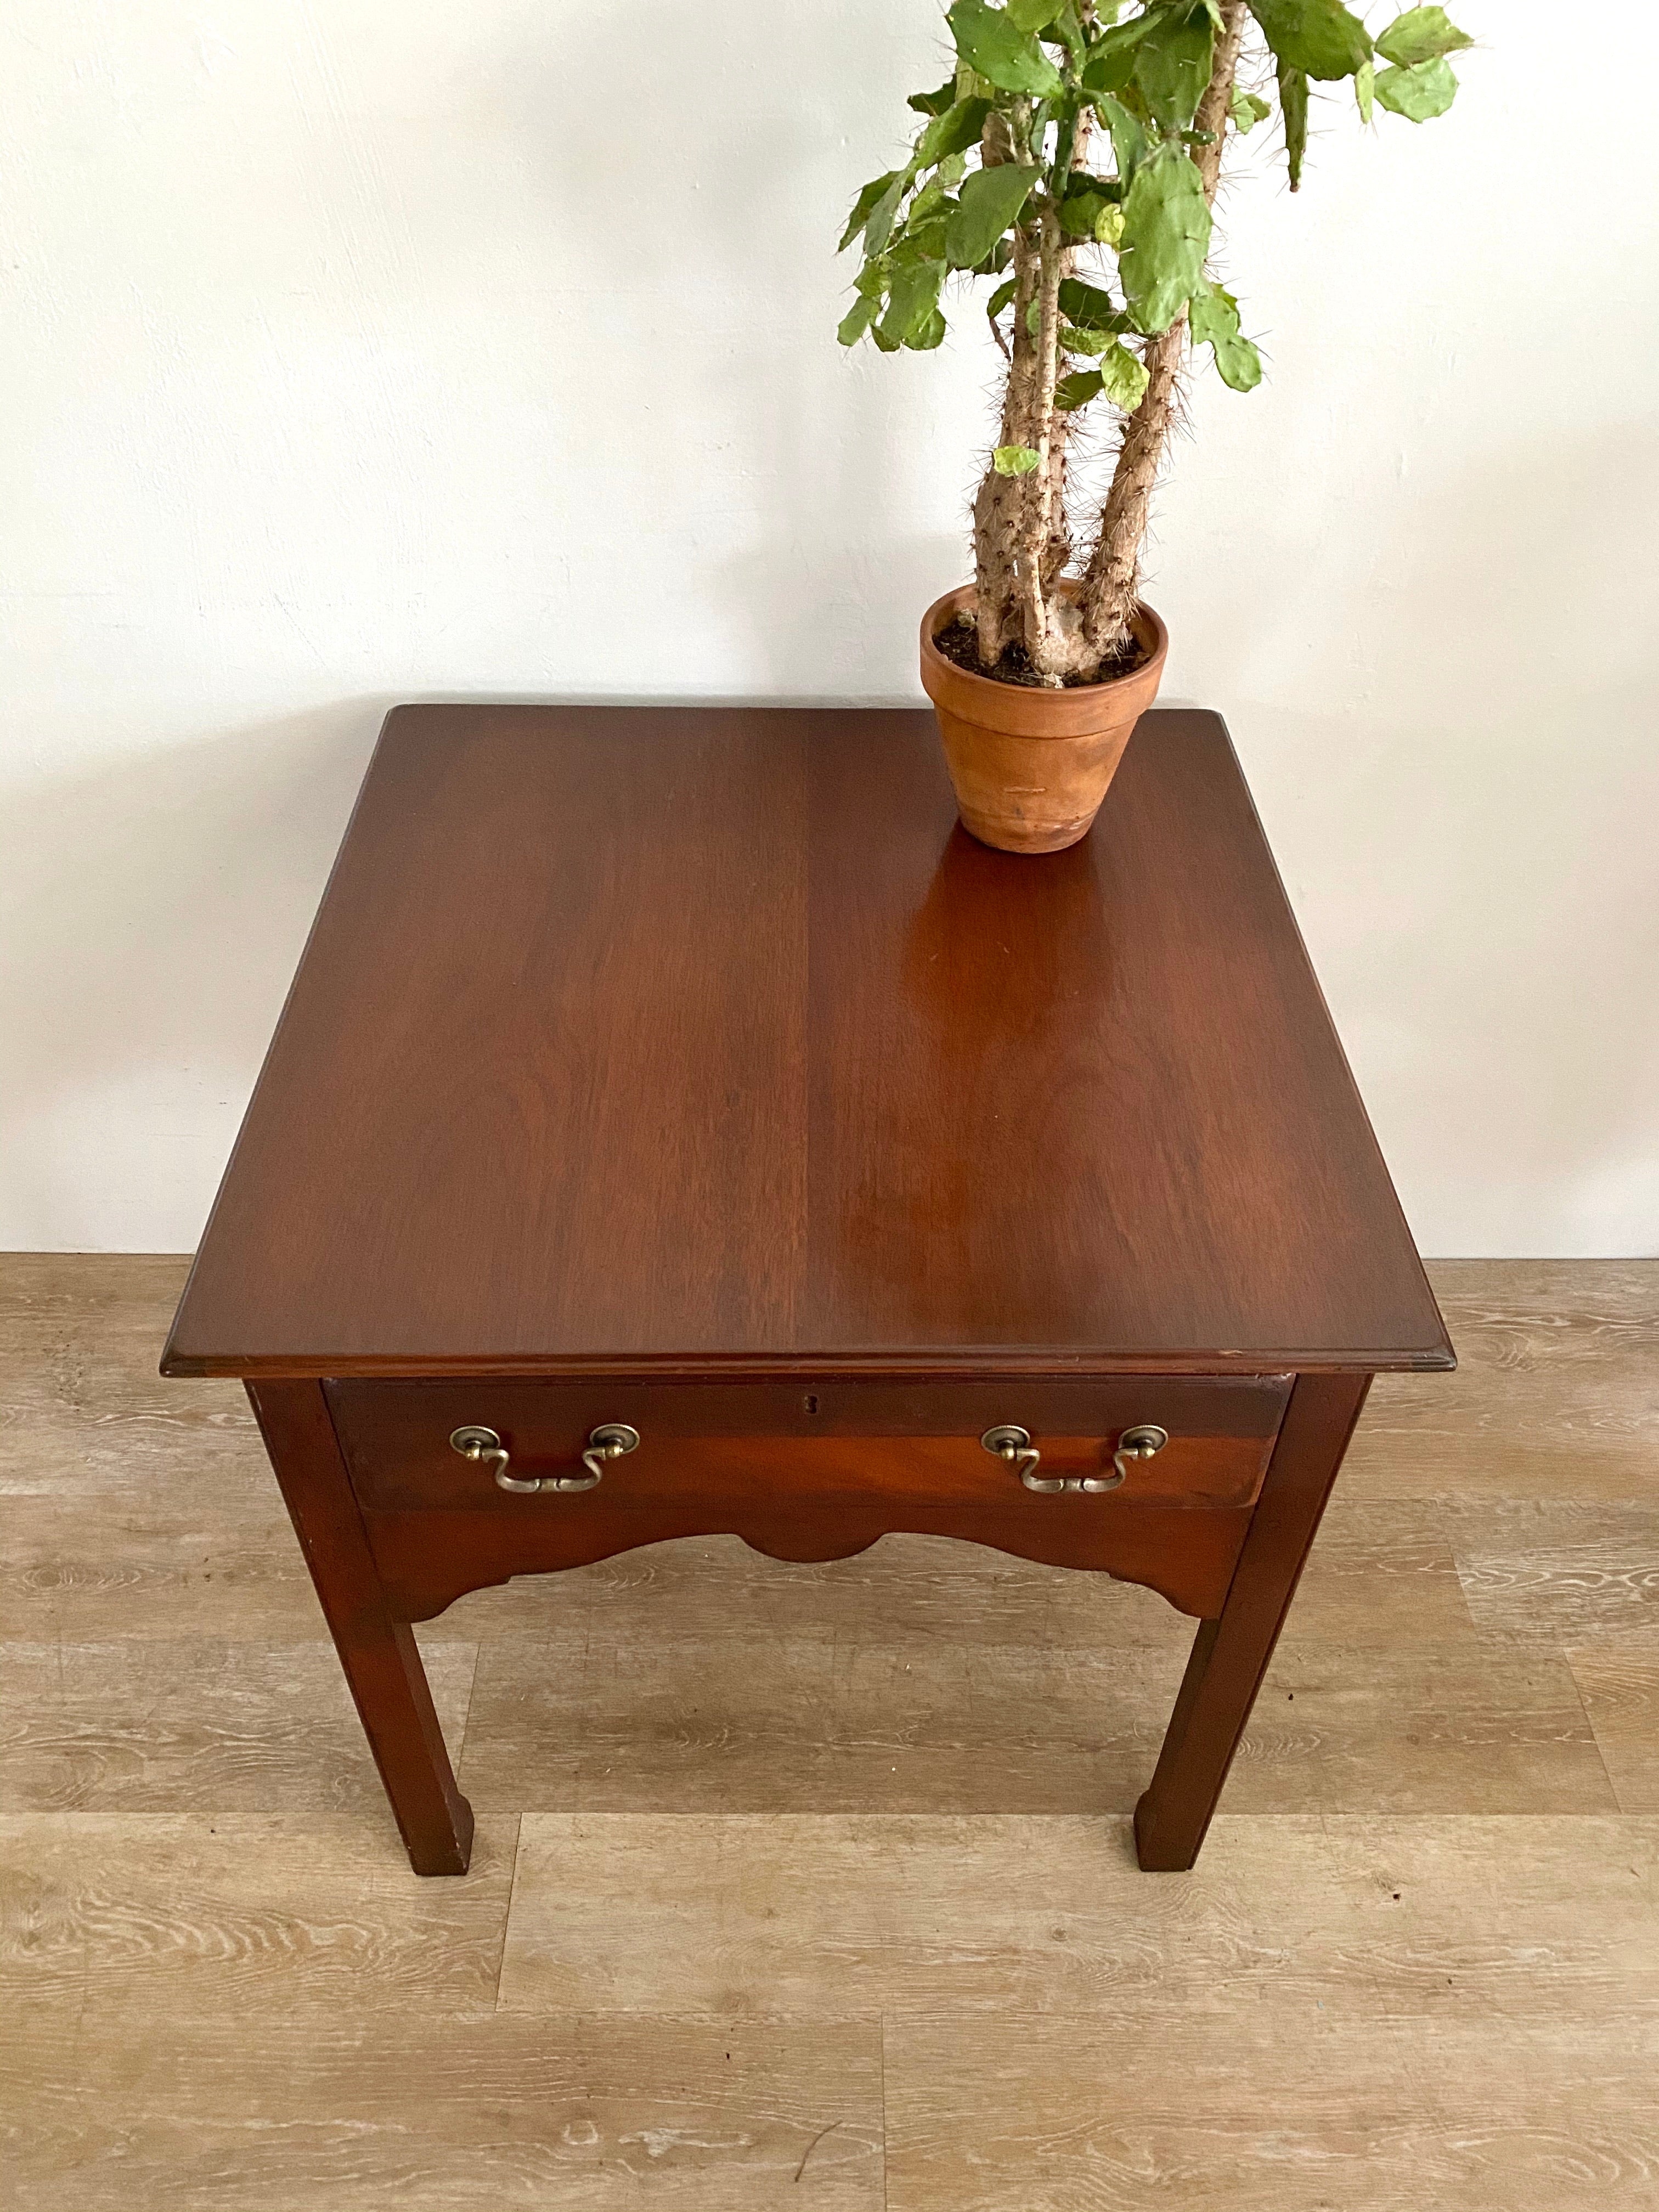 Vintage Large Side Table by Drexel